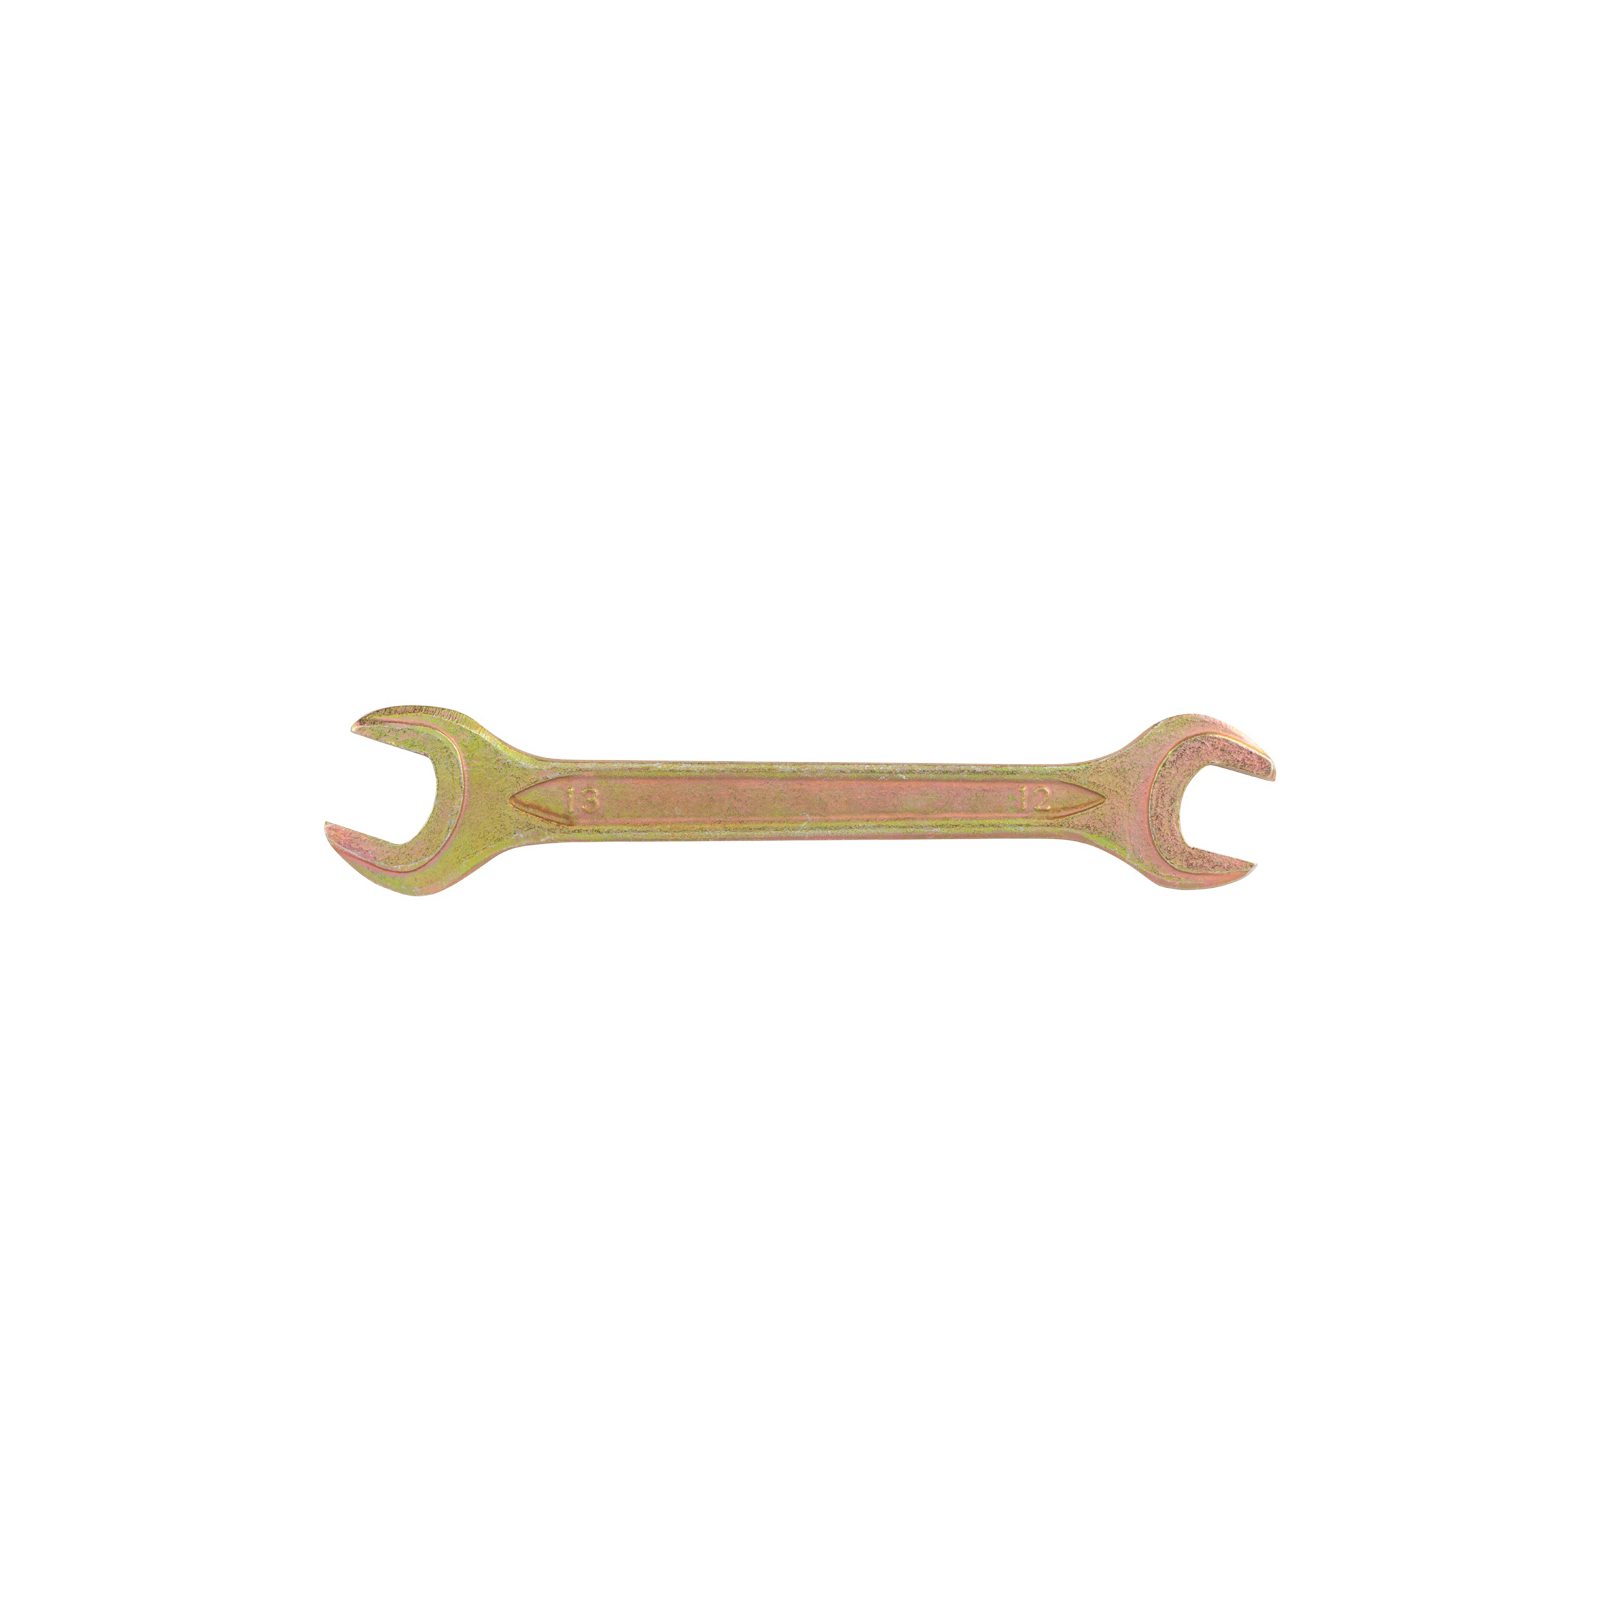 Ключ Sigma рожковый 32x36мм желтый цинк (6025361)